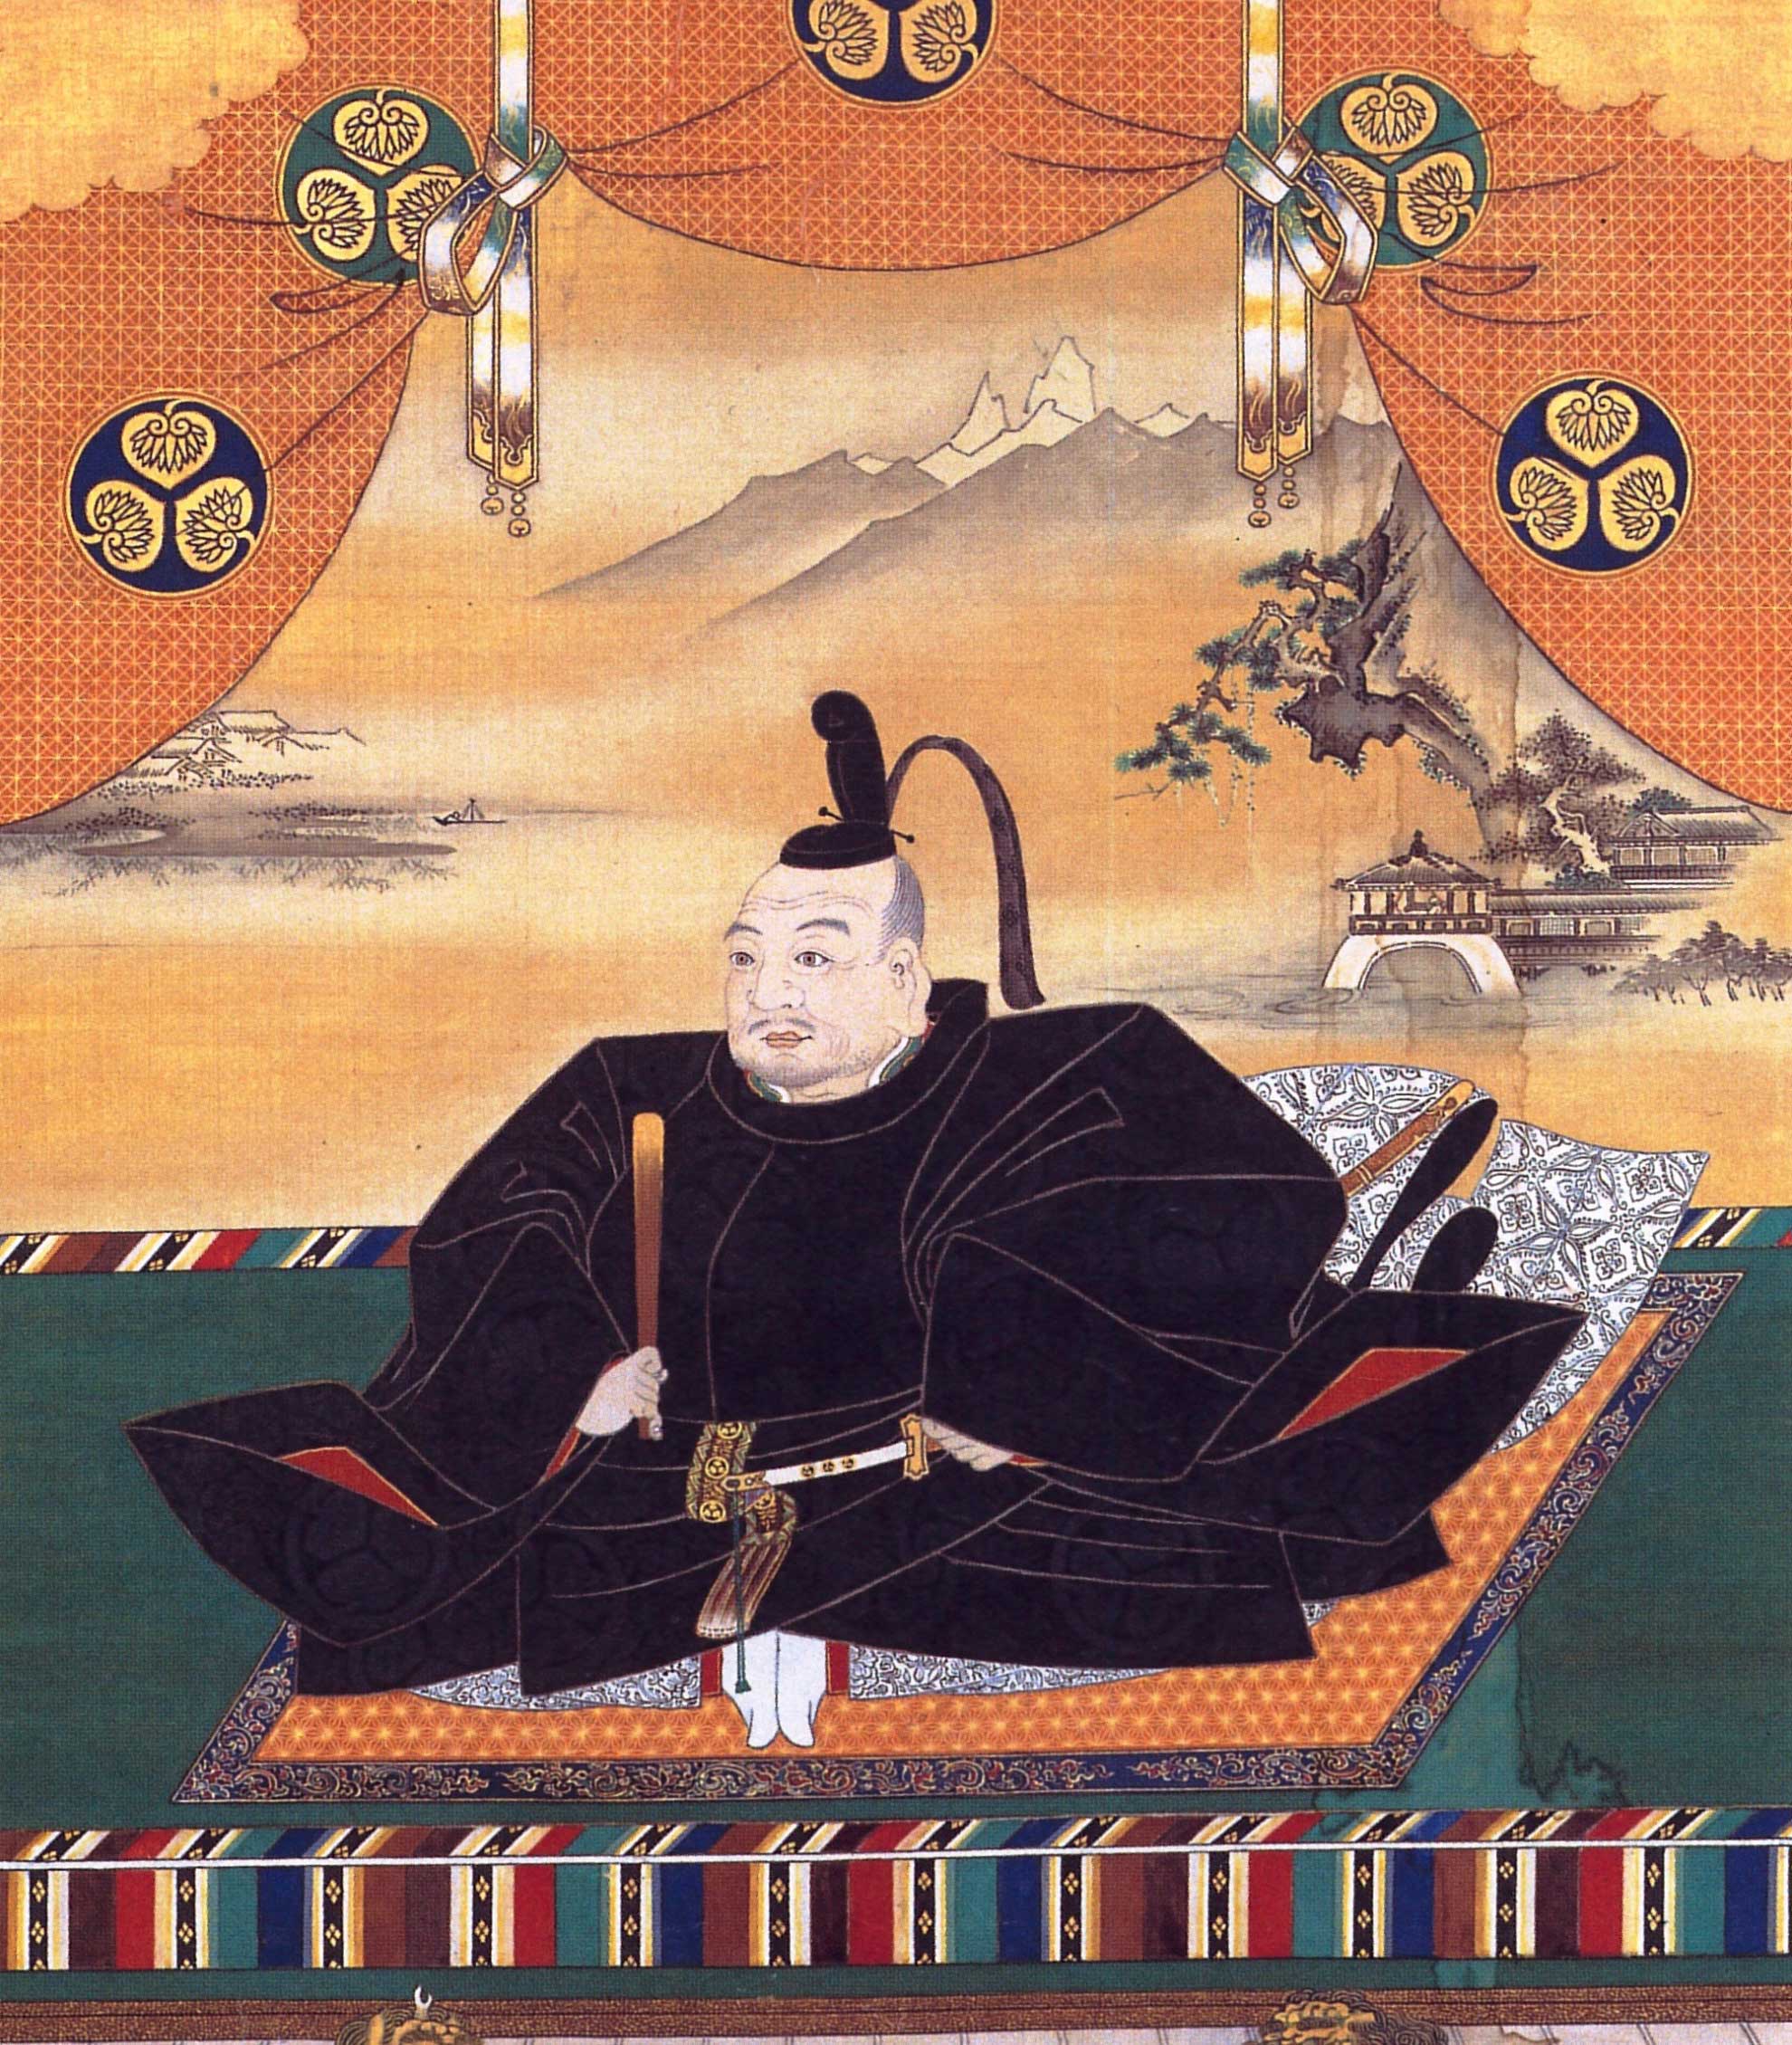 Tokugawa Ieyasu. Le 24 mars, commence la période « des Tokugawa » ou période Edo. Les Tokugawa gouverneront en tant que shōgun jusqu'en 1867. -